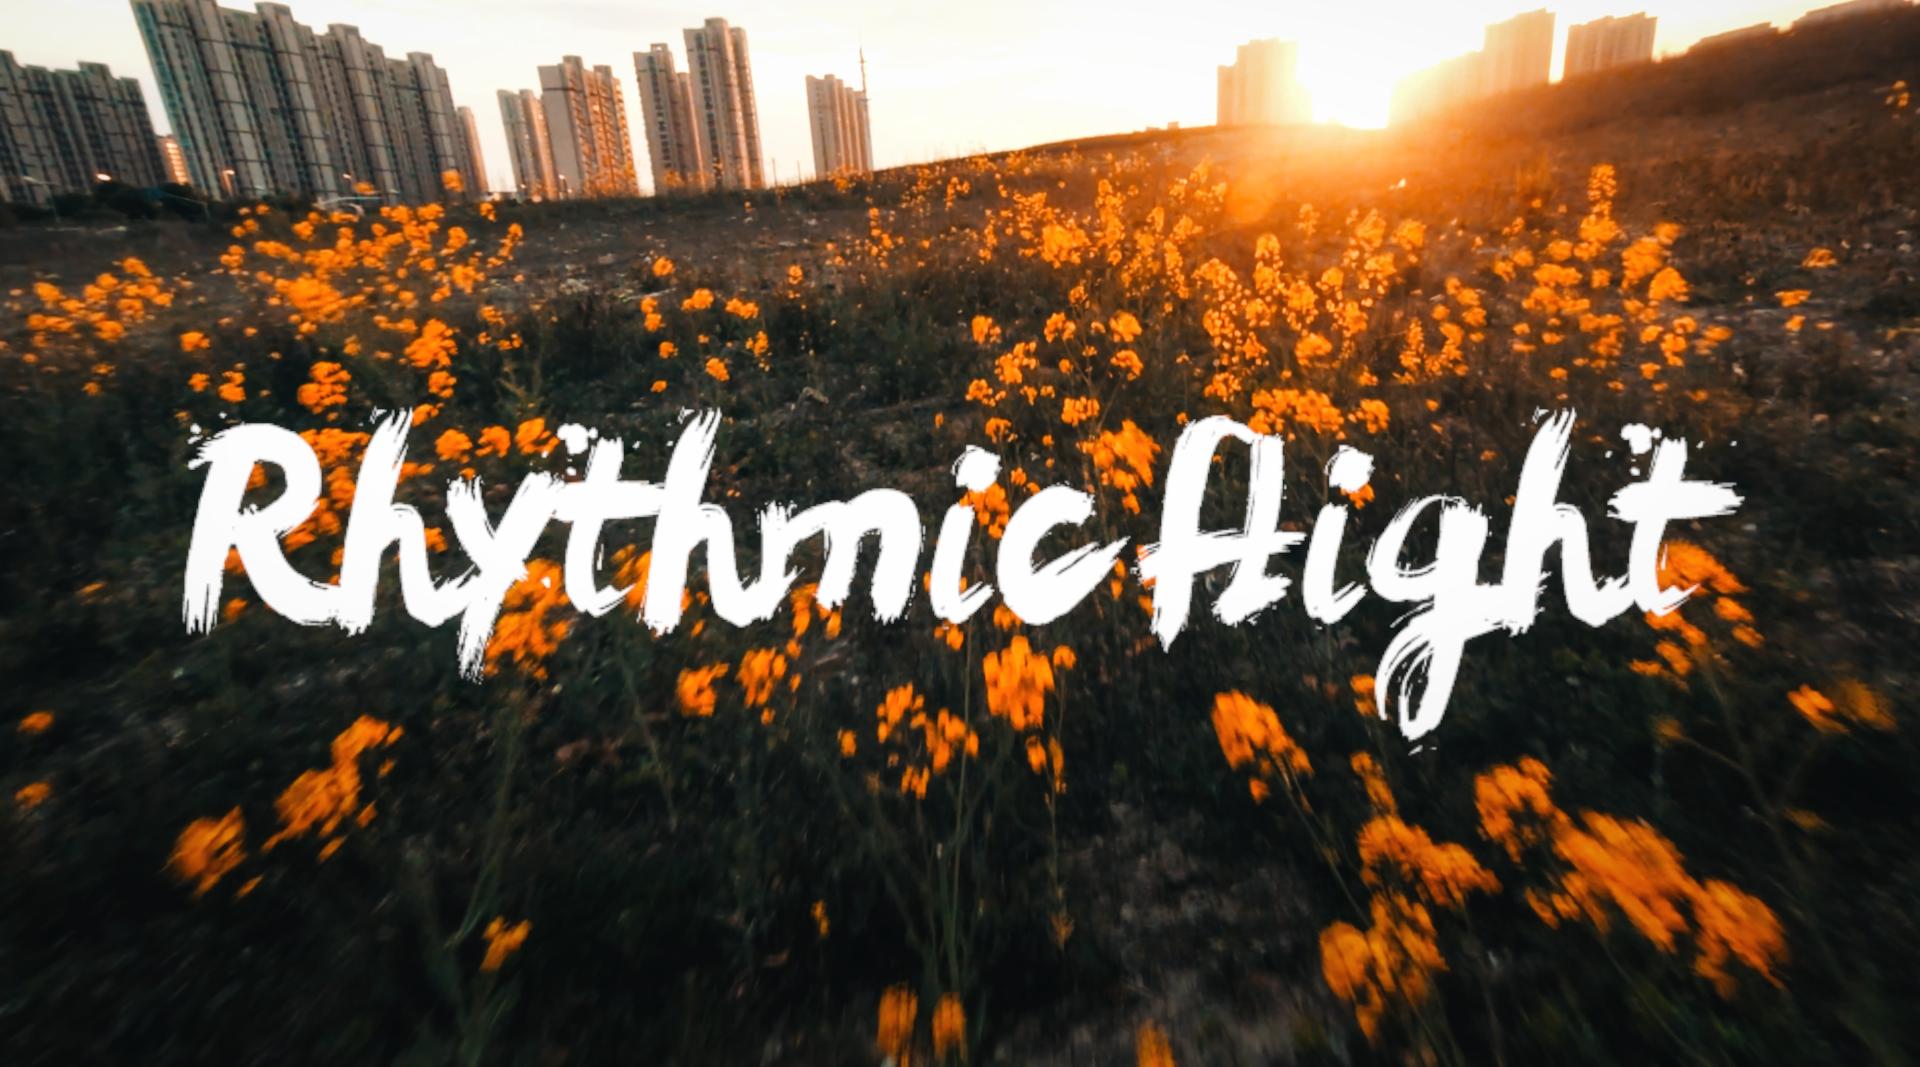 Rhythmic flight | 穿越机节奏飞行